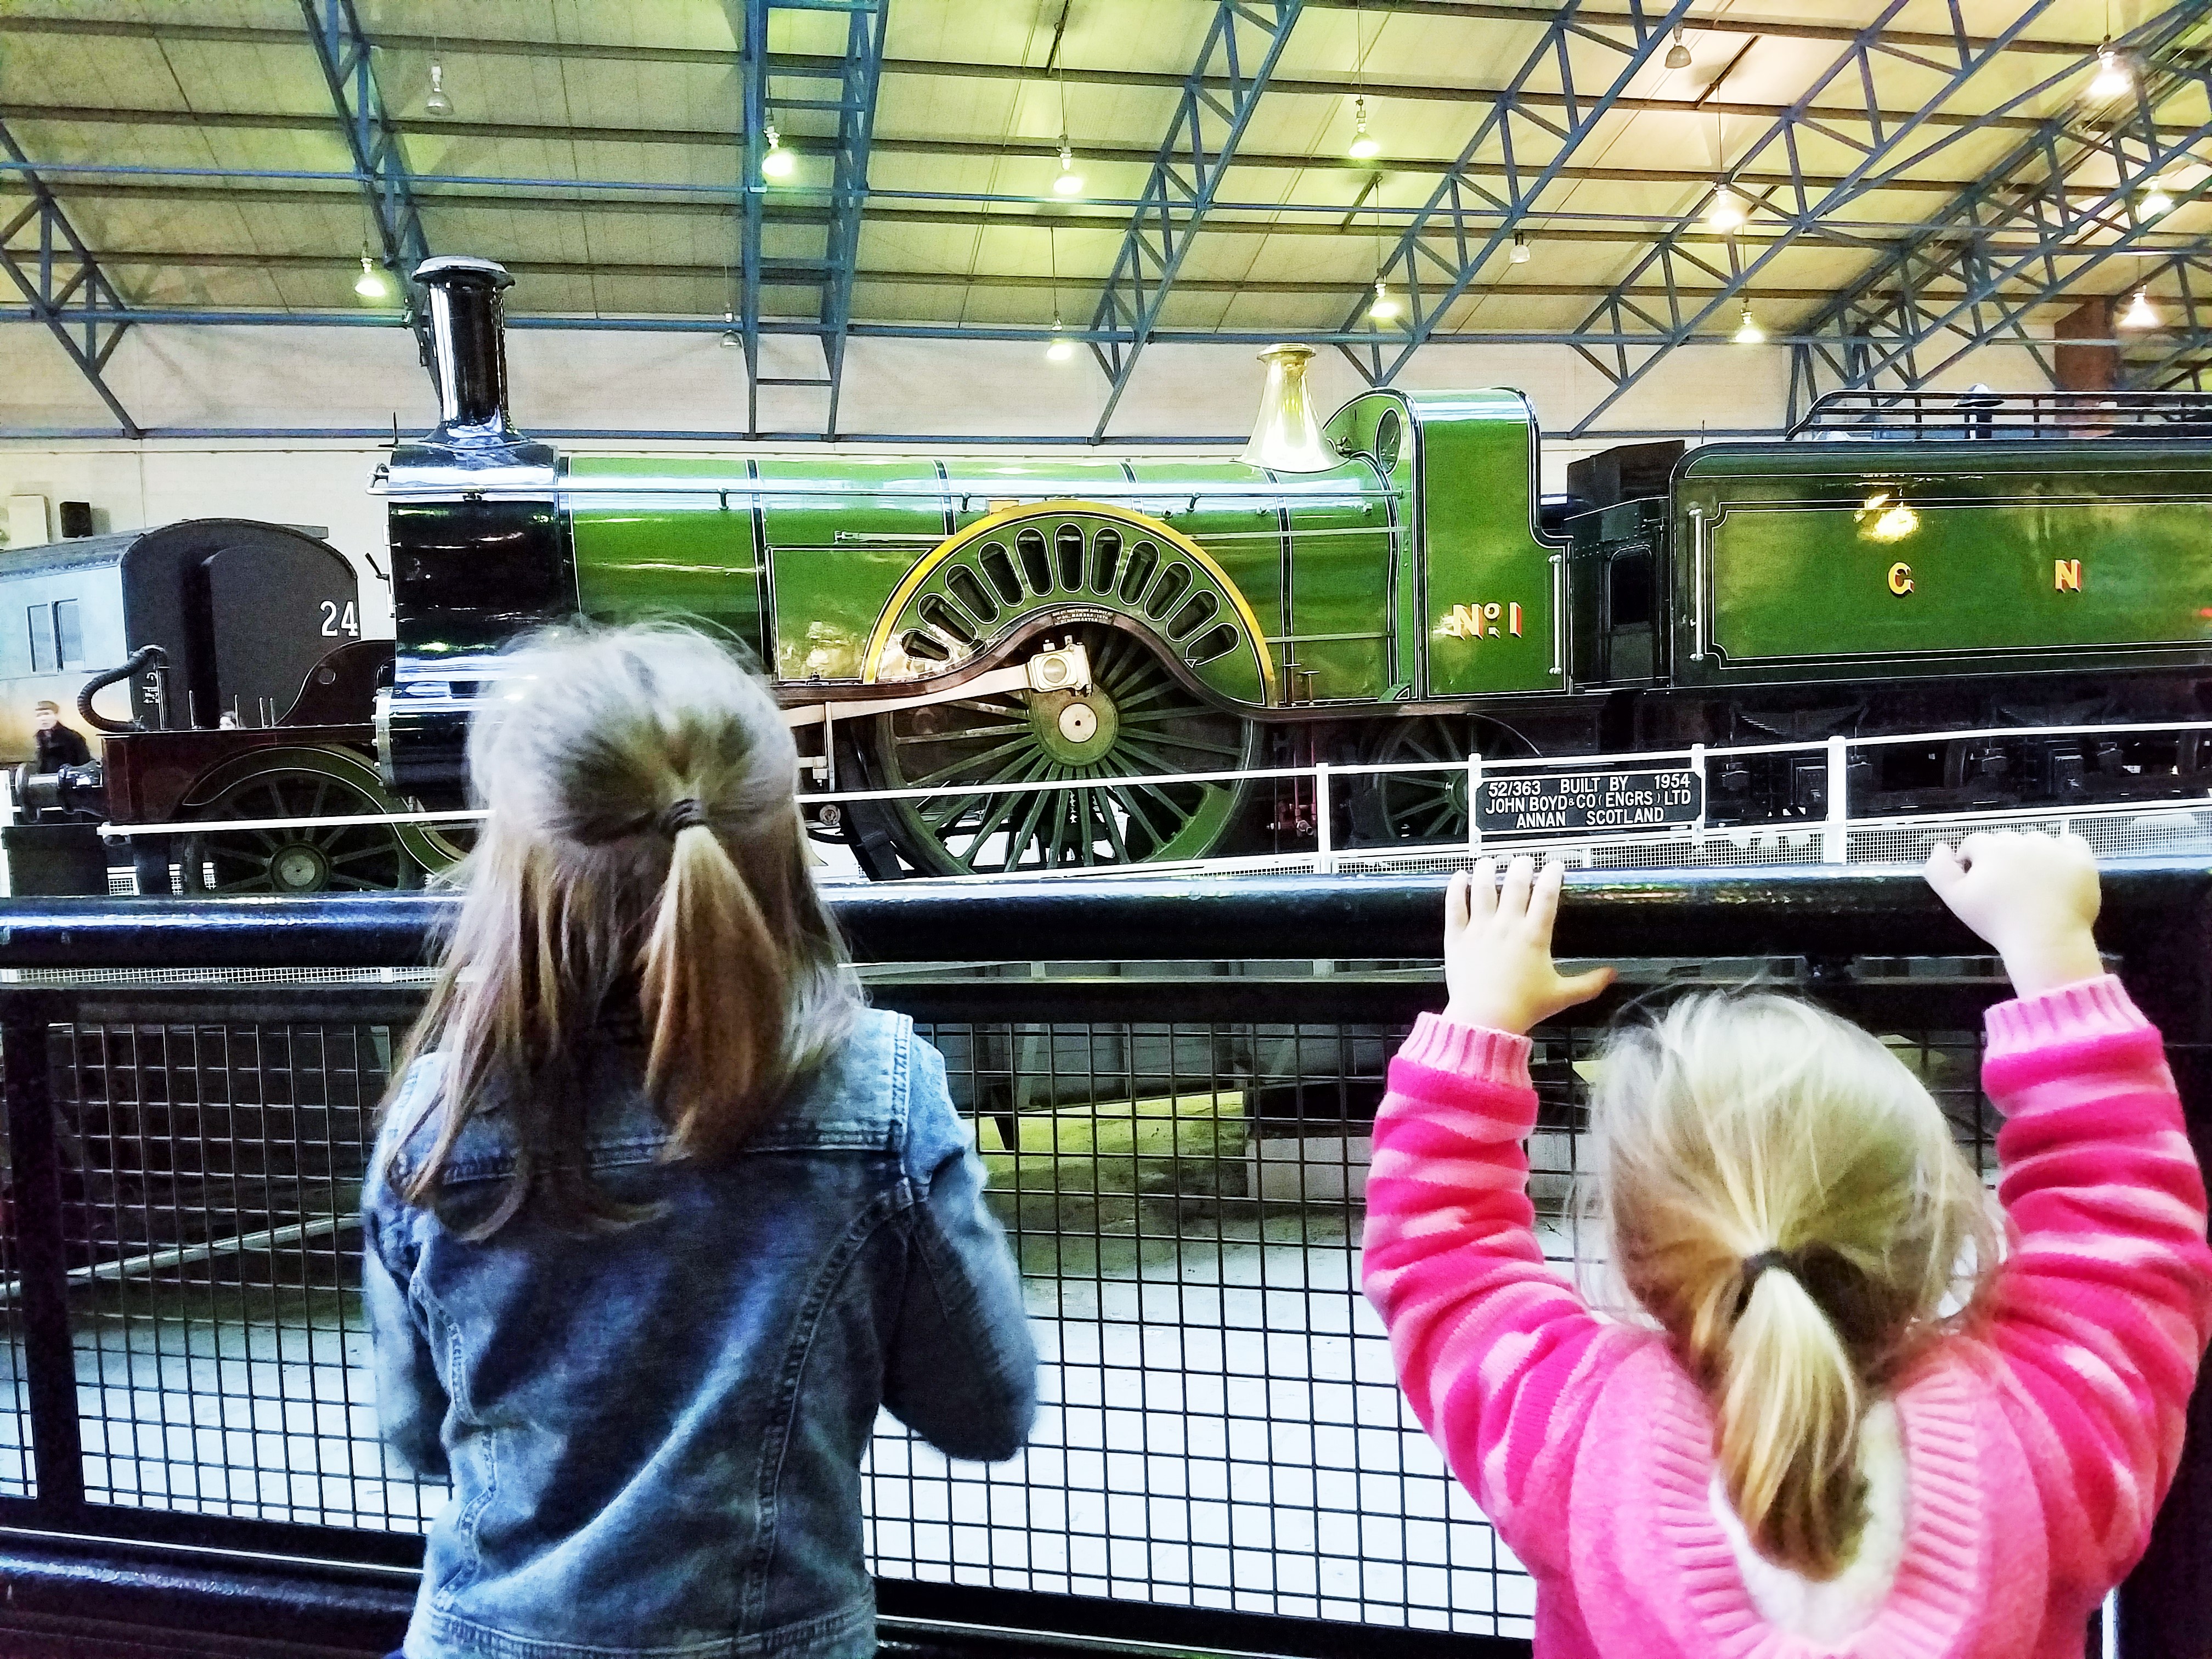 Green Train on turntable National Railway Museum